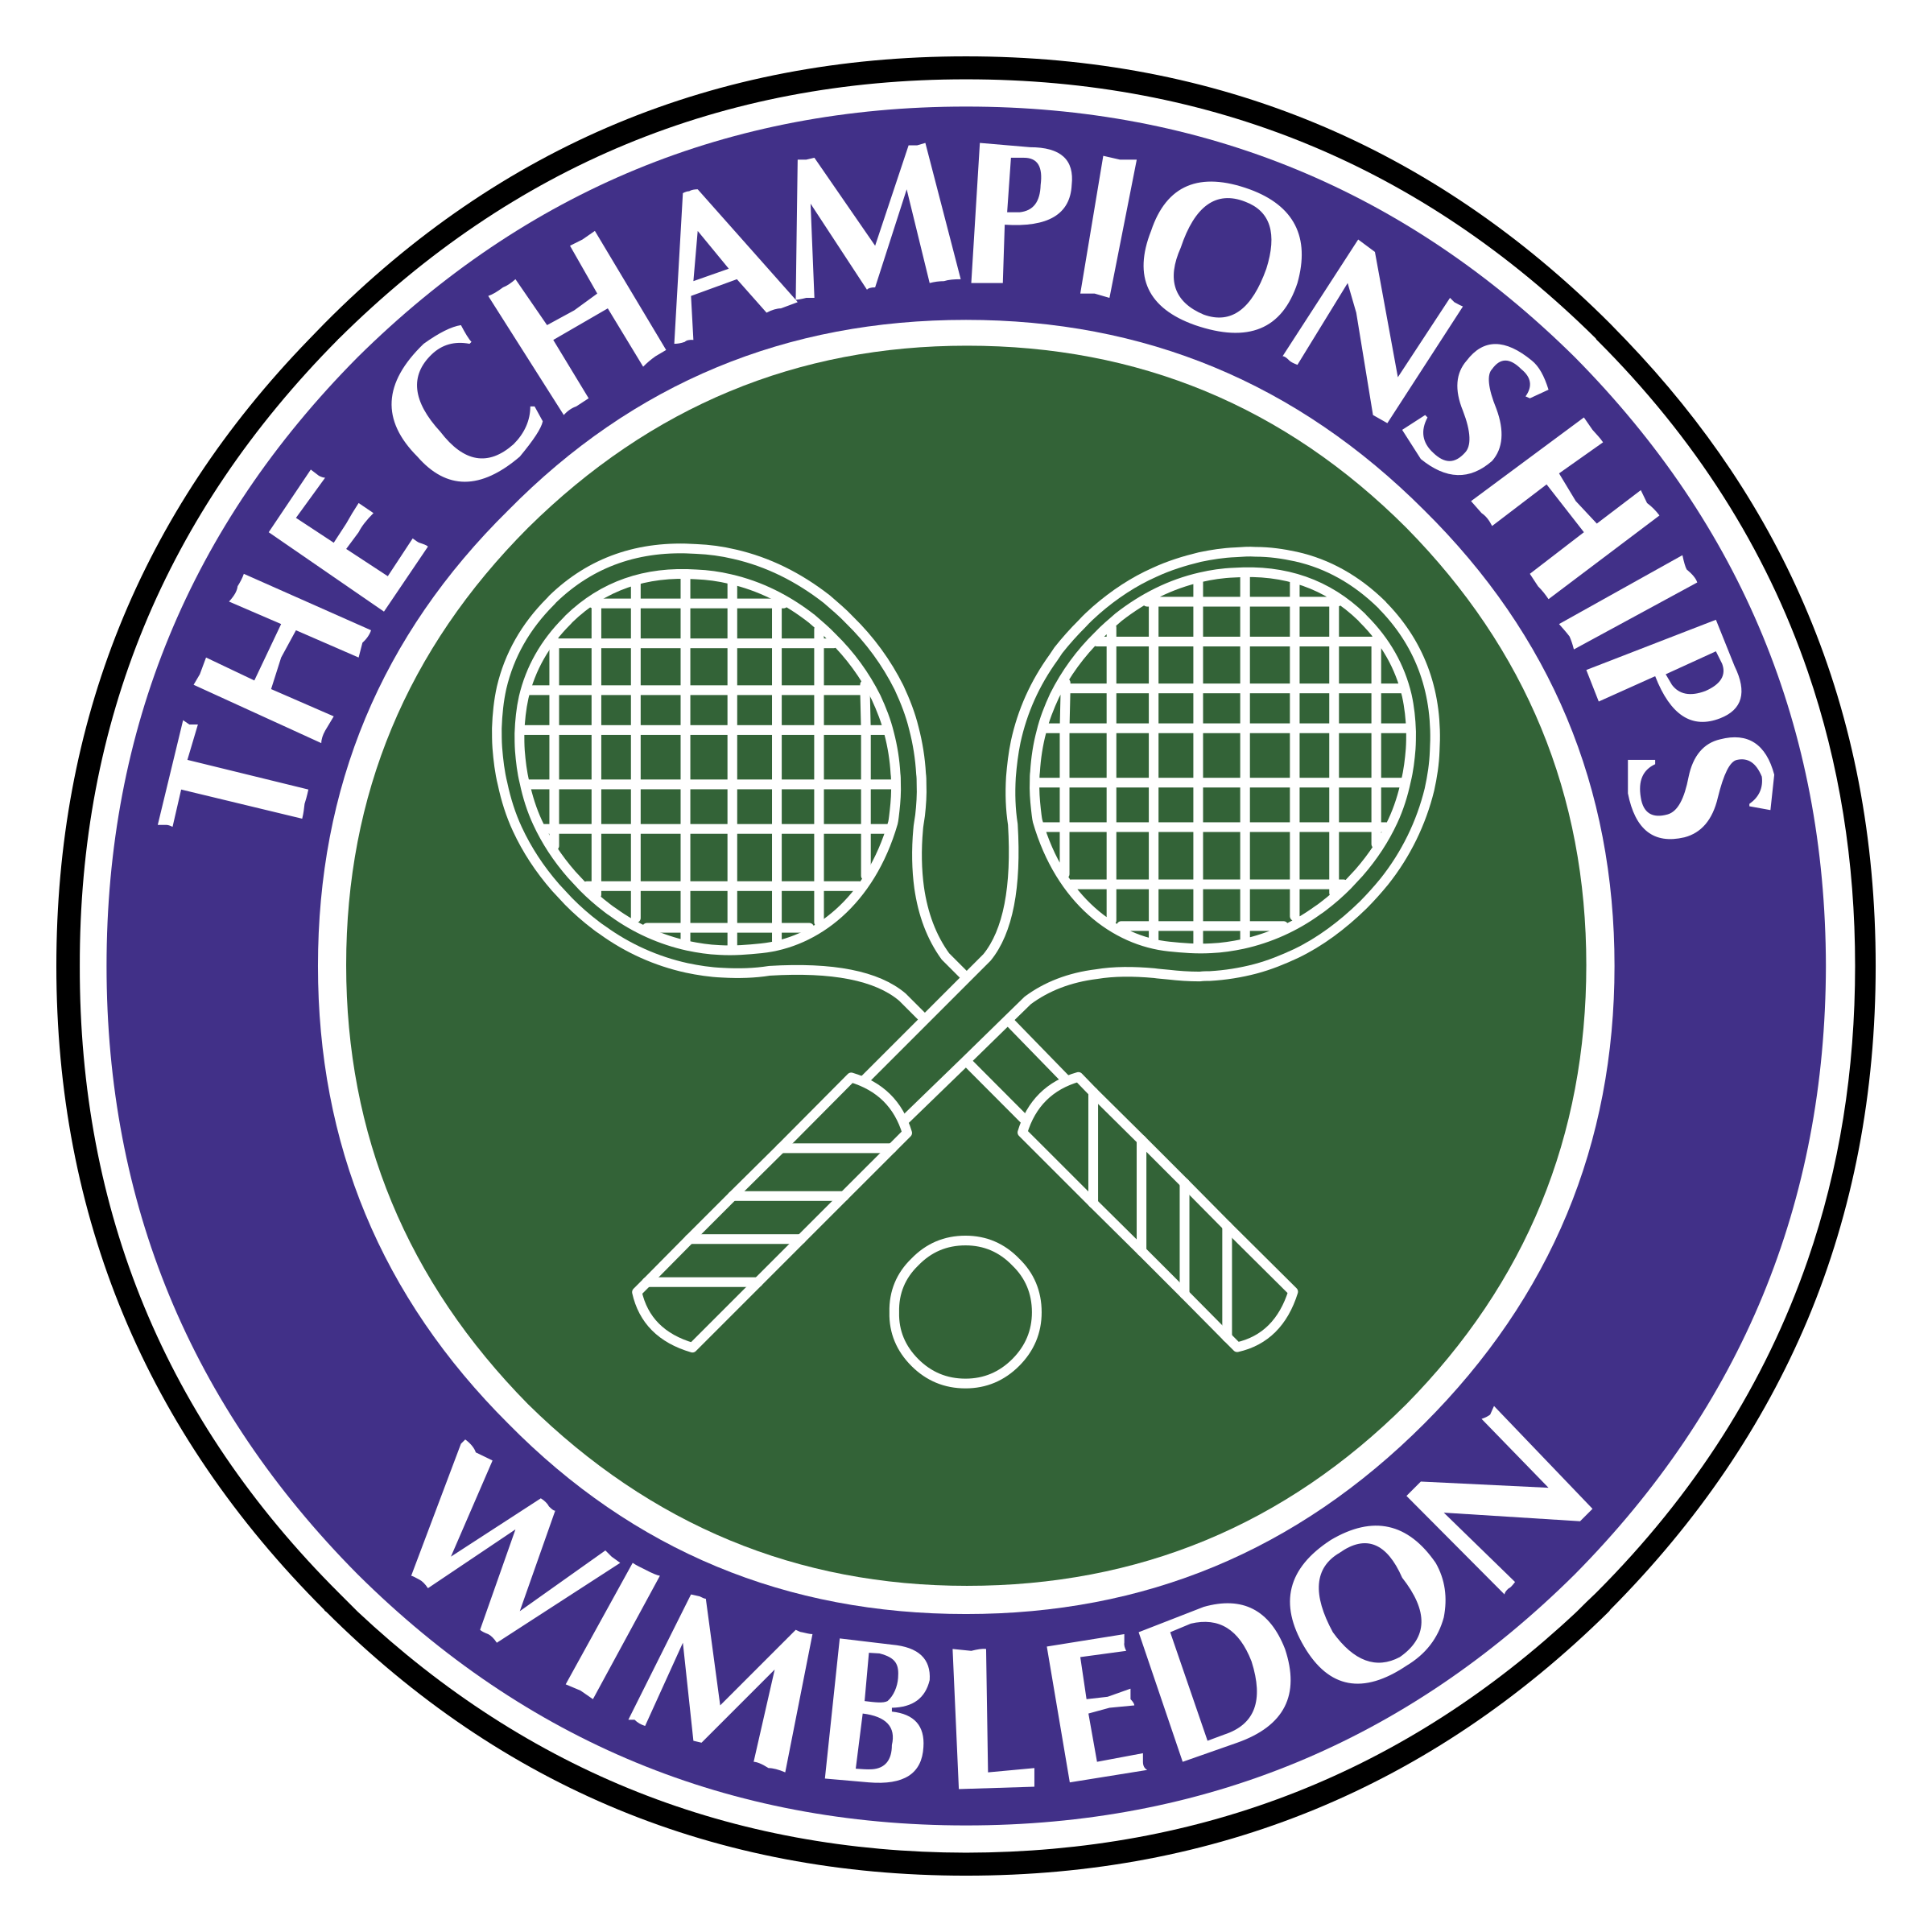 Suppliers to Wimbledon Tennis Club